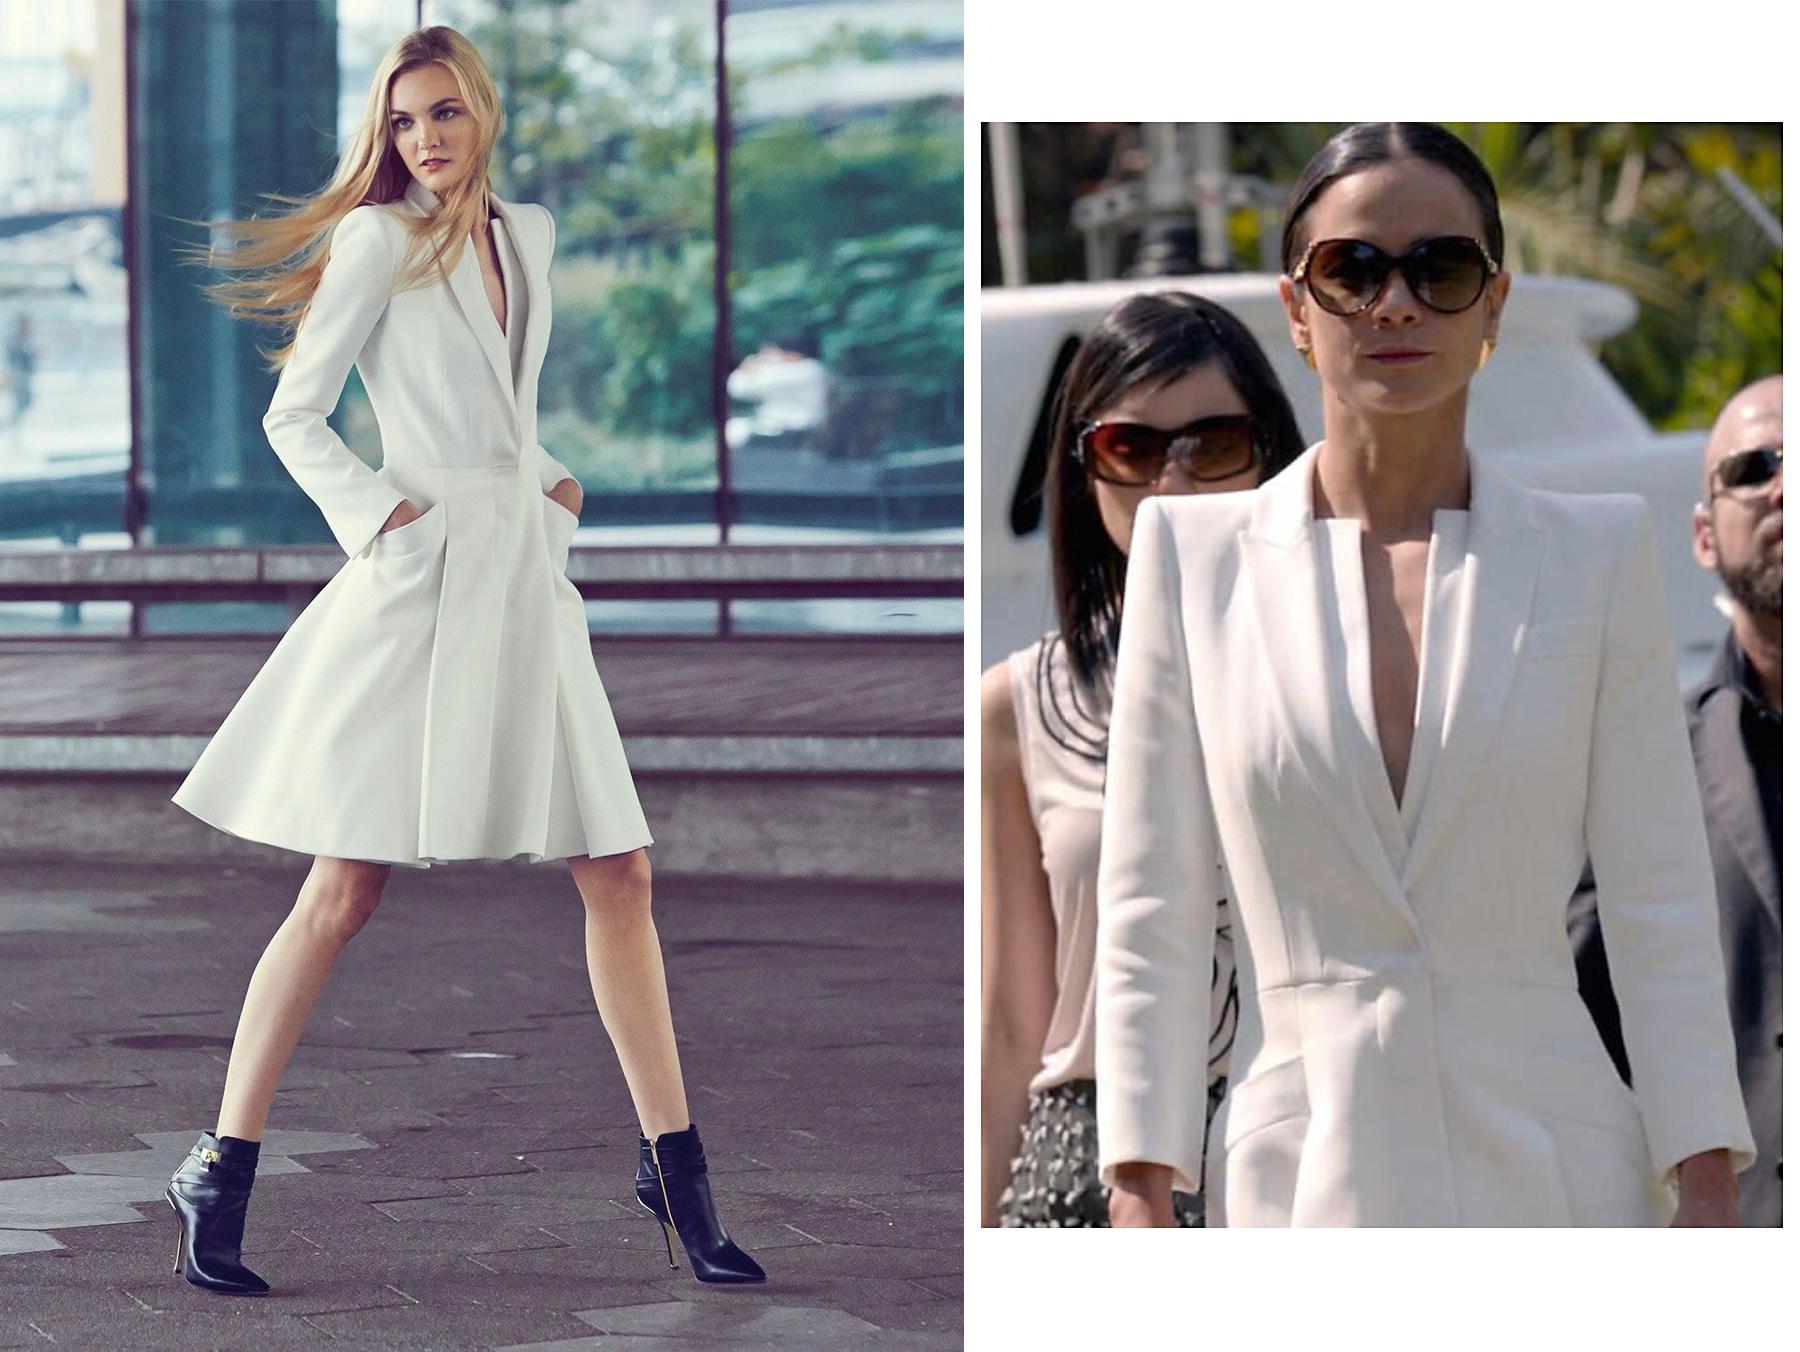 Women's ALEXANDER McQUEEN S/S 2015 White Tailored Classic Structure Longline Coat Dress